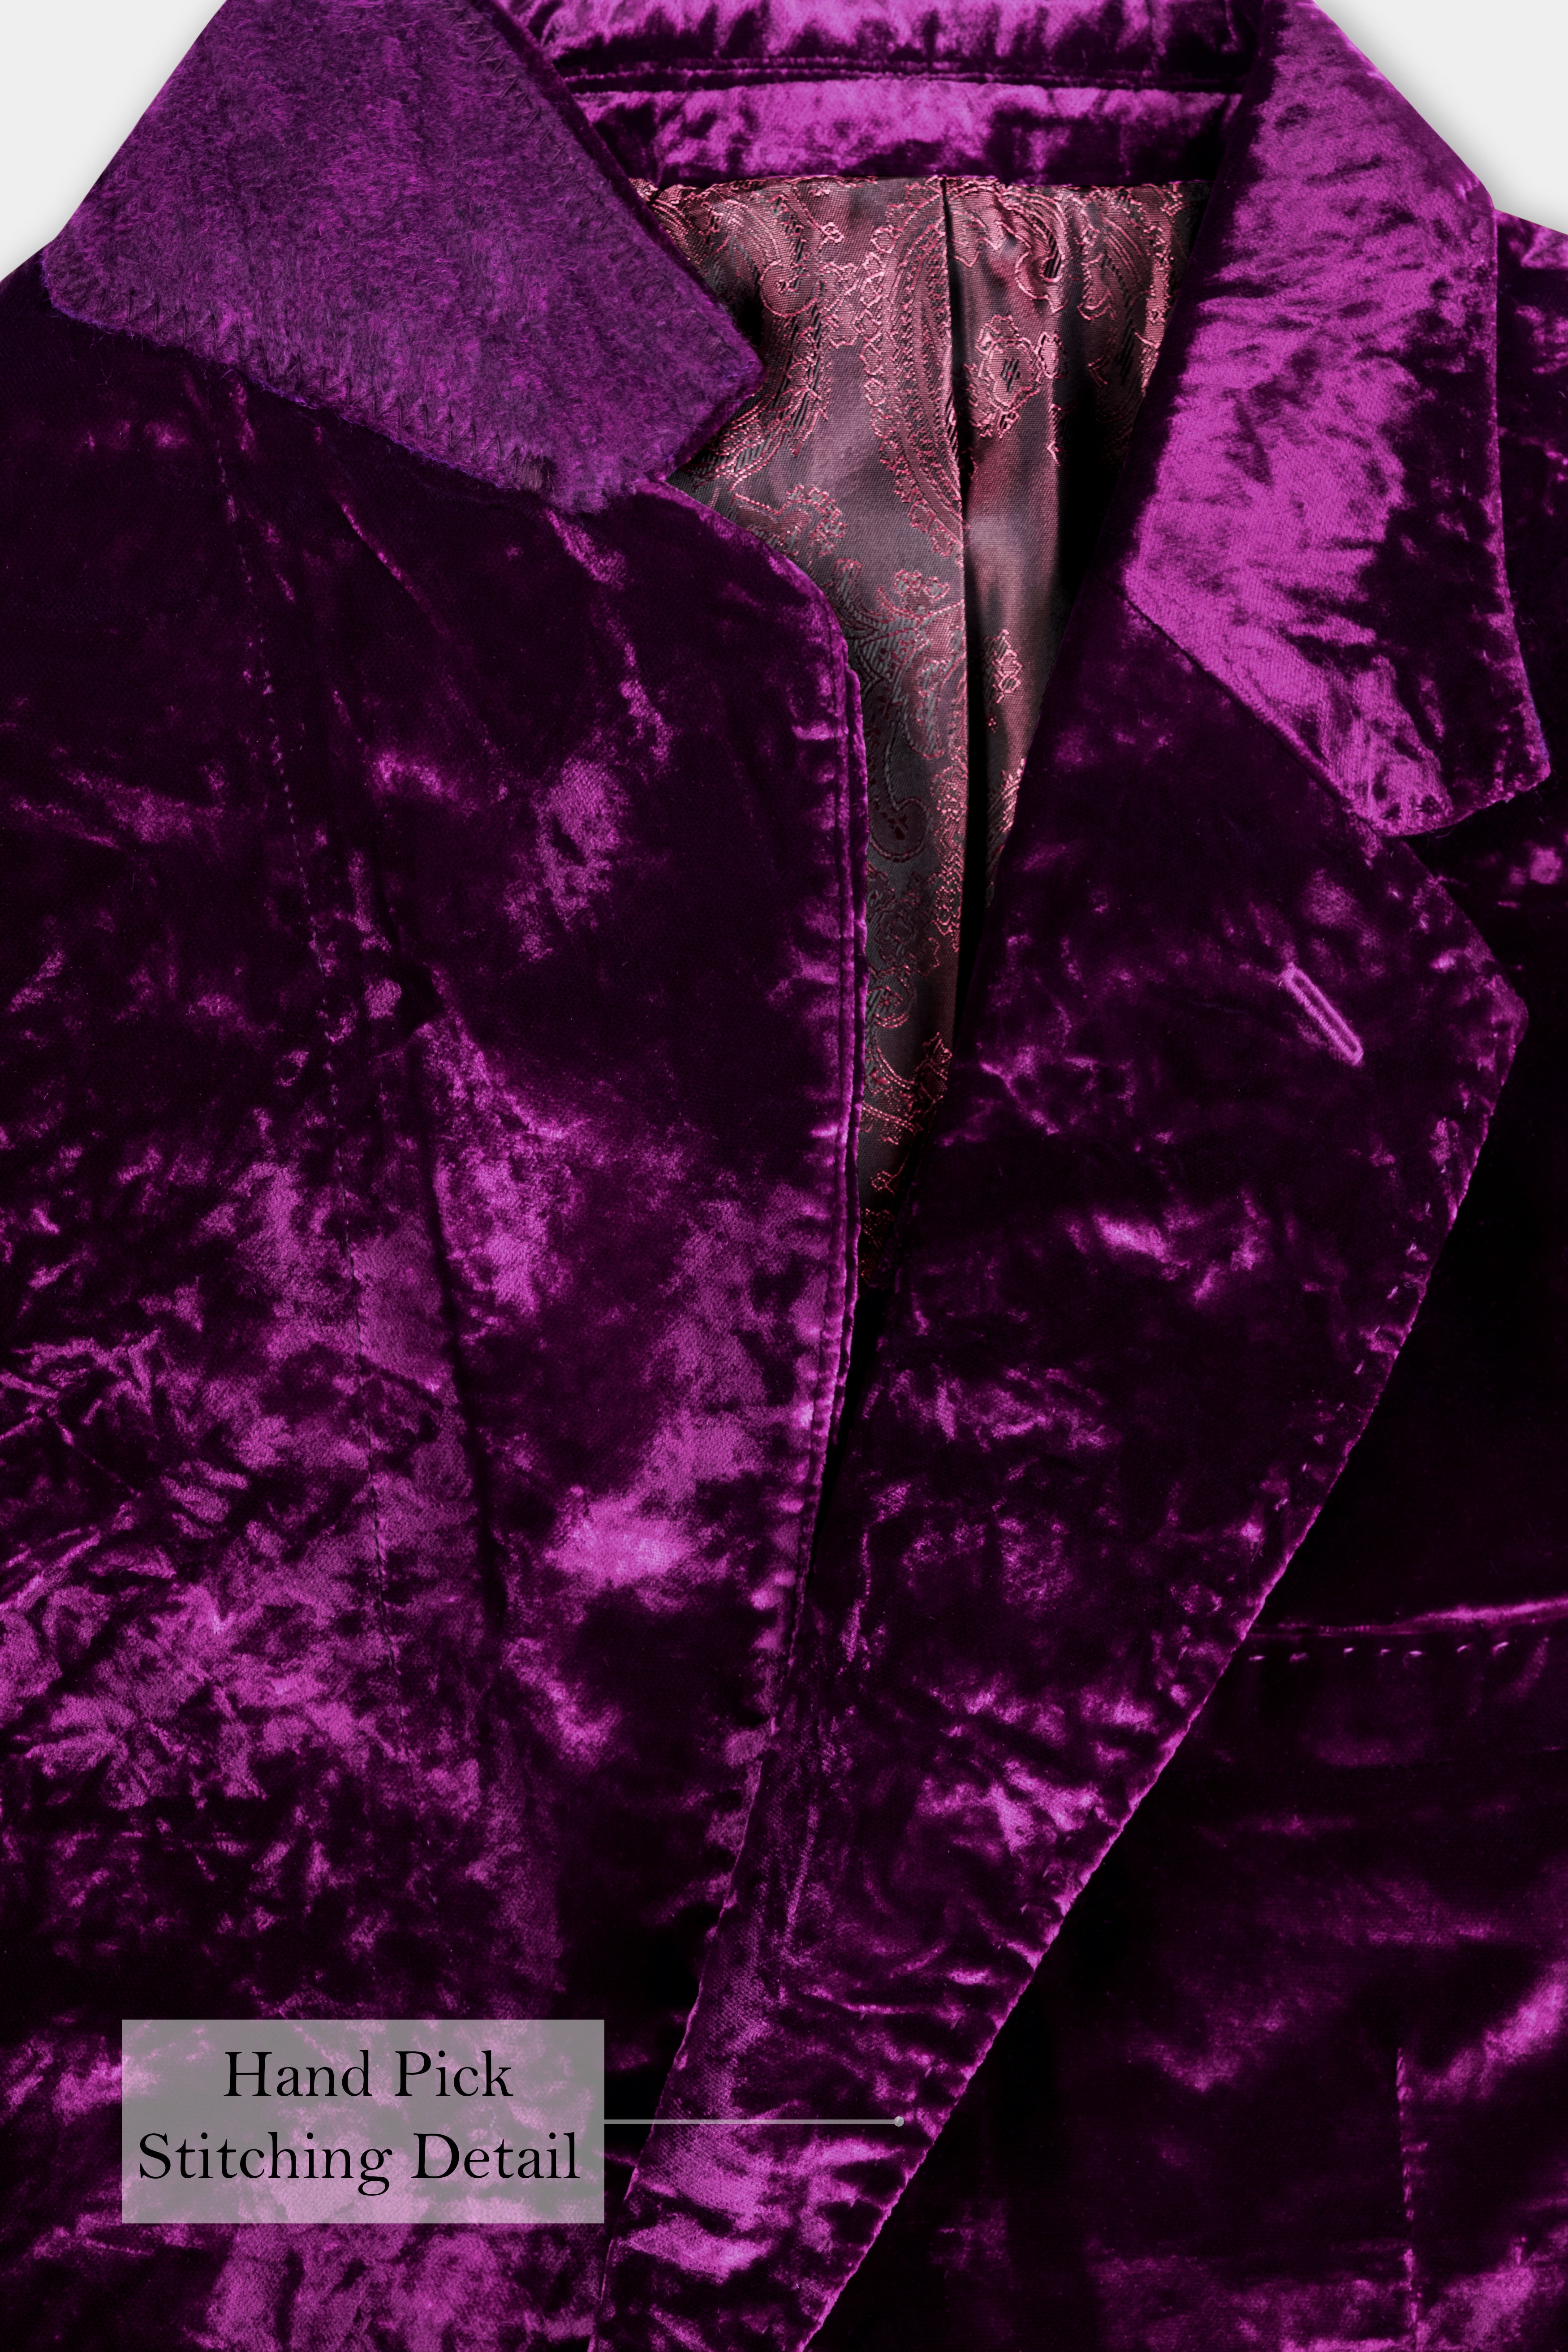 Melanzane Purple Crushed Velvet Blazer